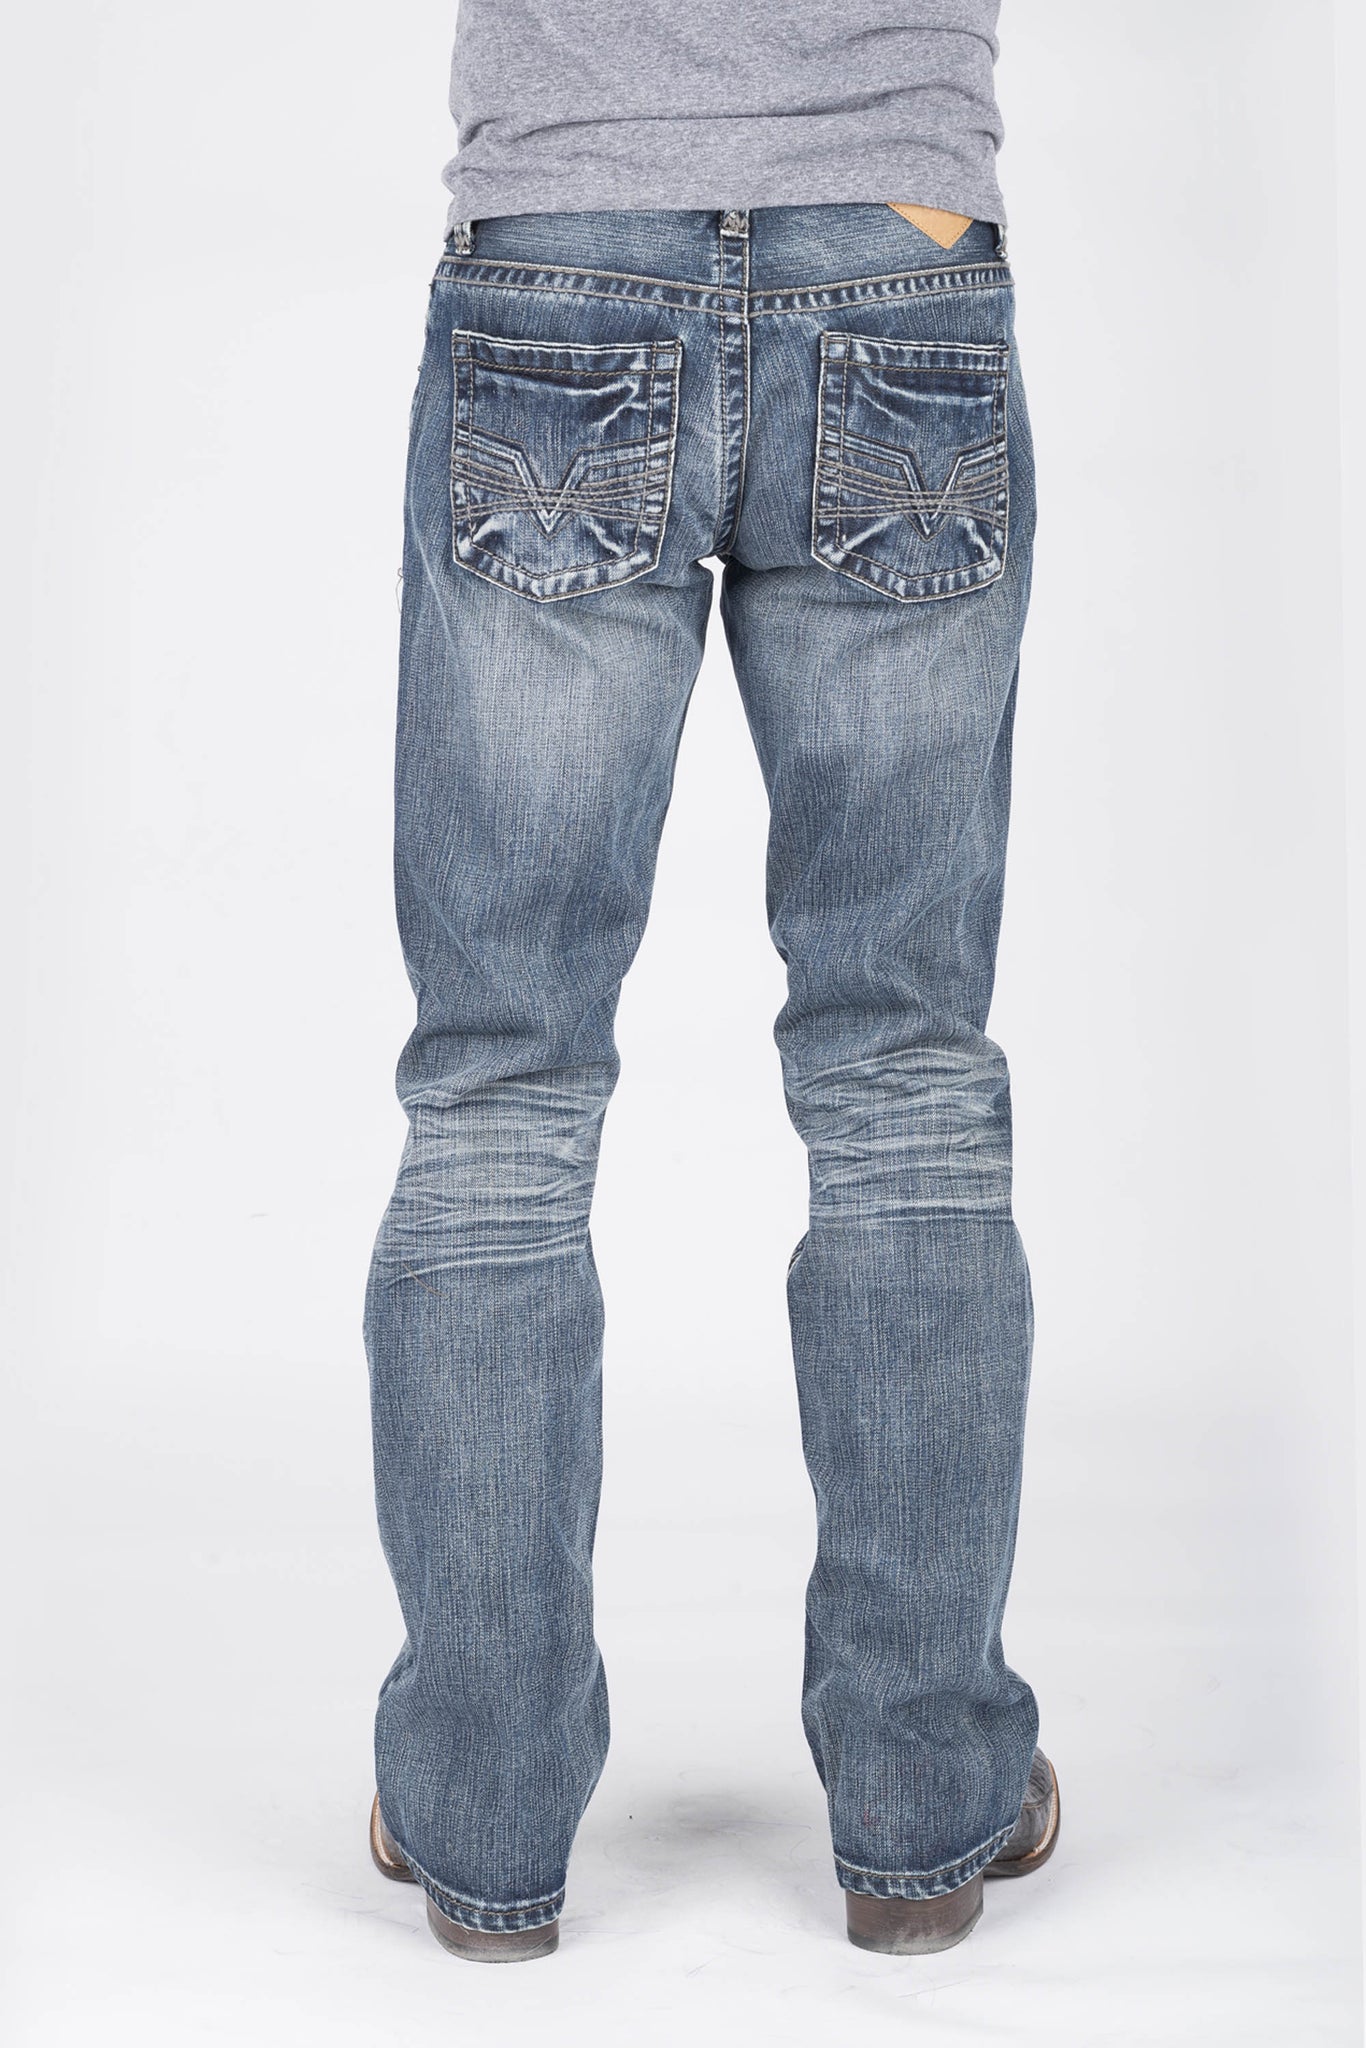 Tin Haul Men's Regular Joe Fit Light Wash Bootcut Jeans Indigo 28 LNG US at   Men's Clothing store